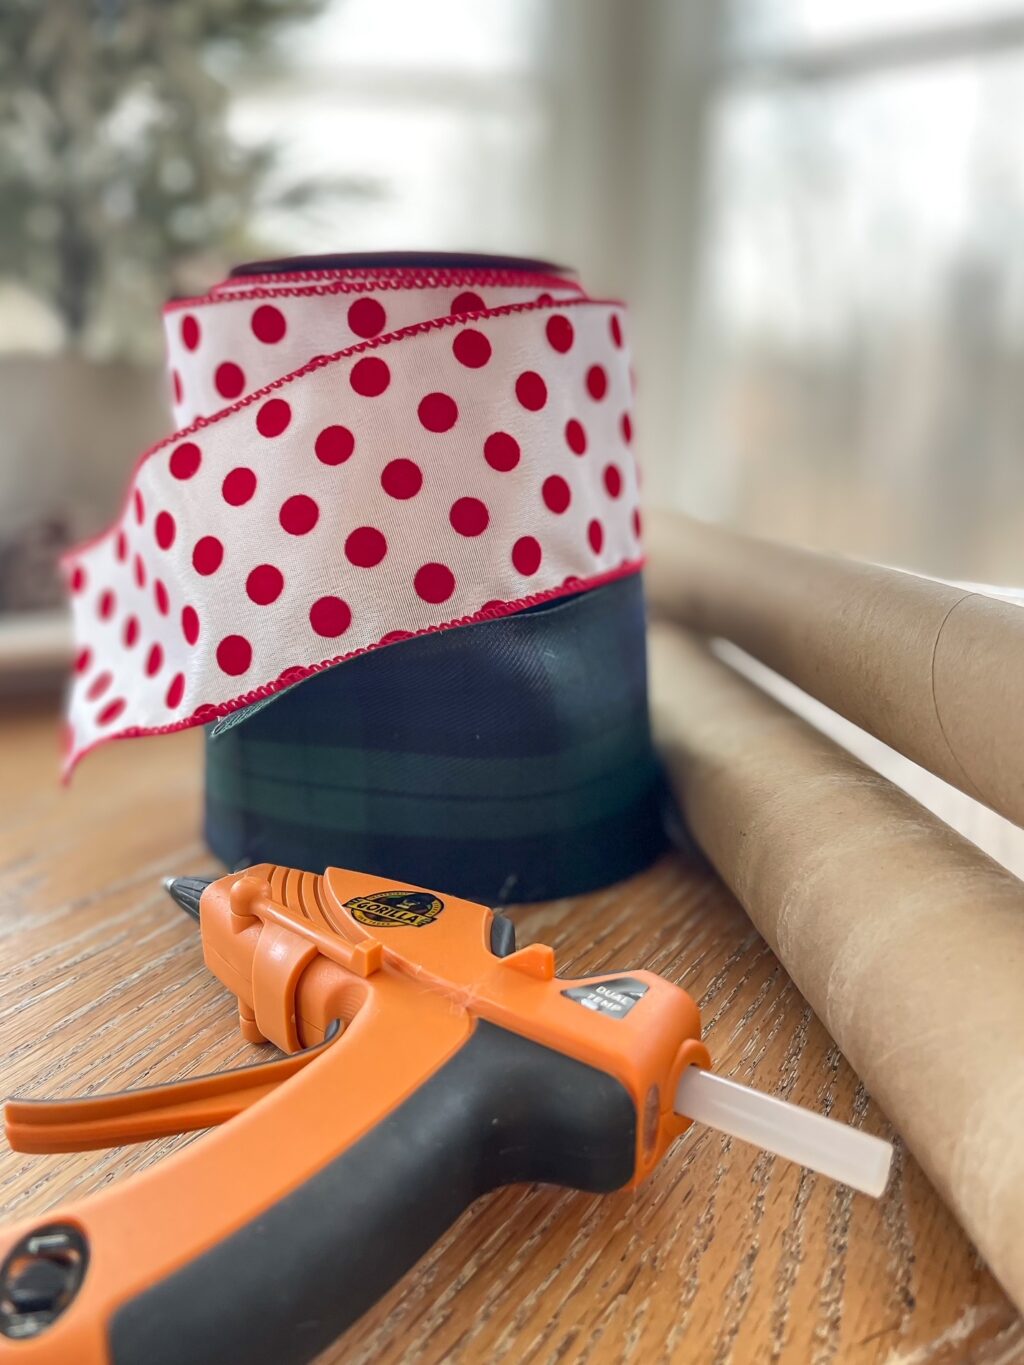 spools of ribbon, cardboard rolls and hot glue gun